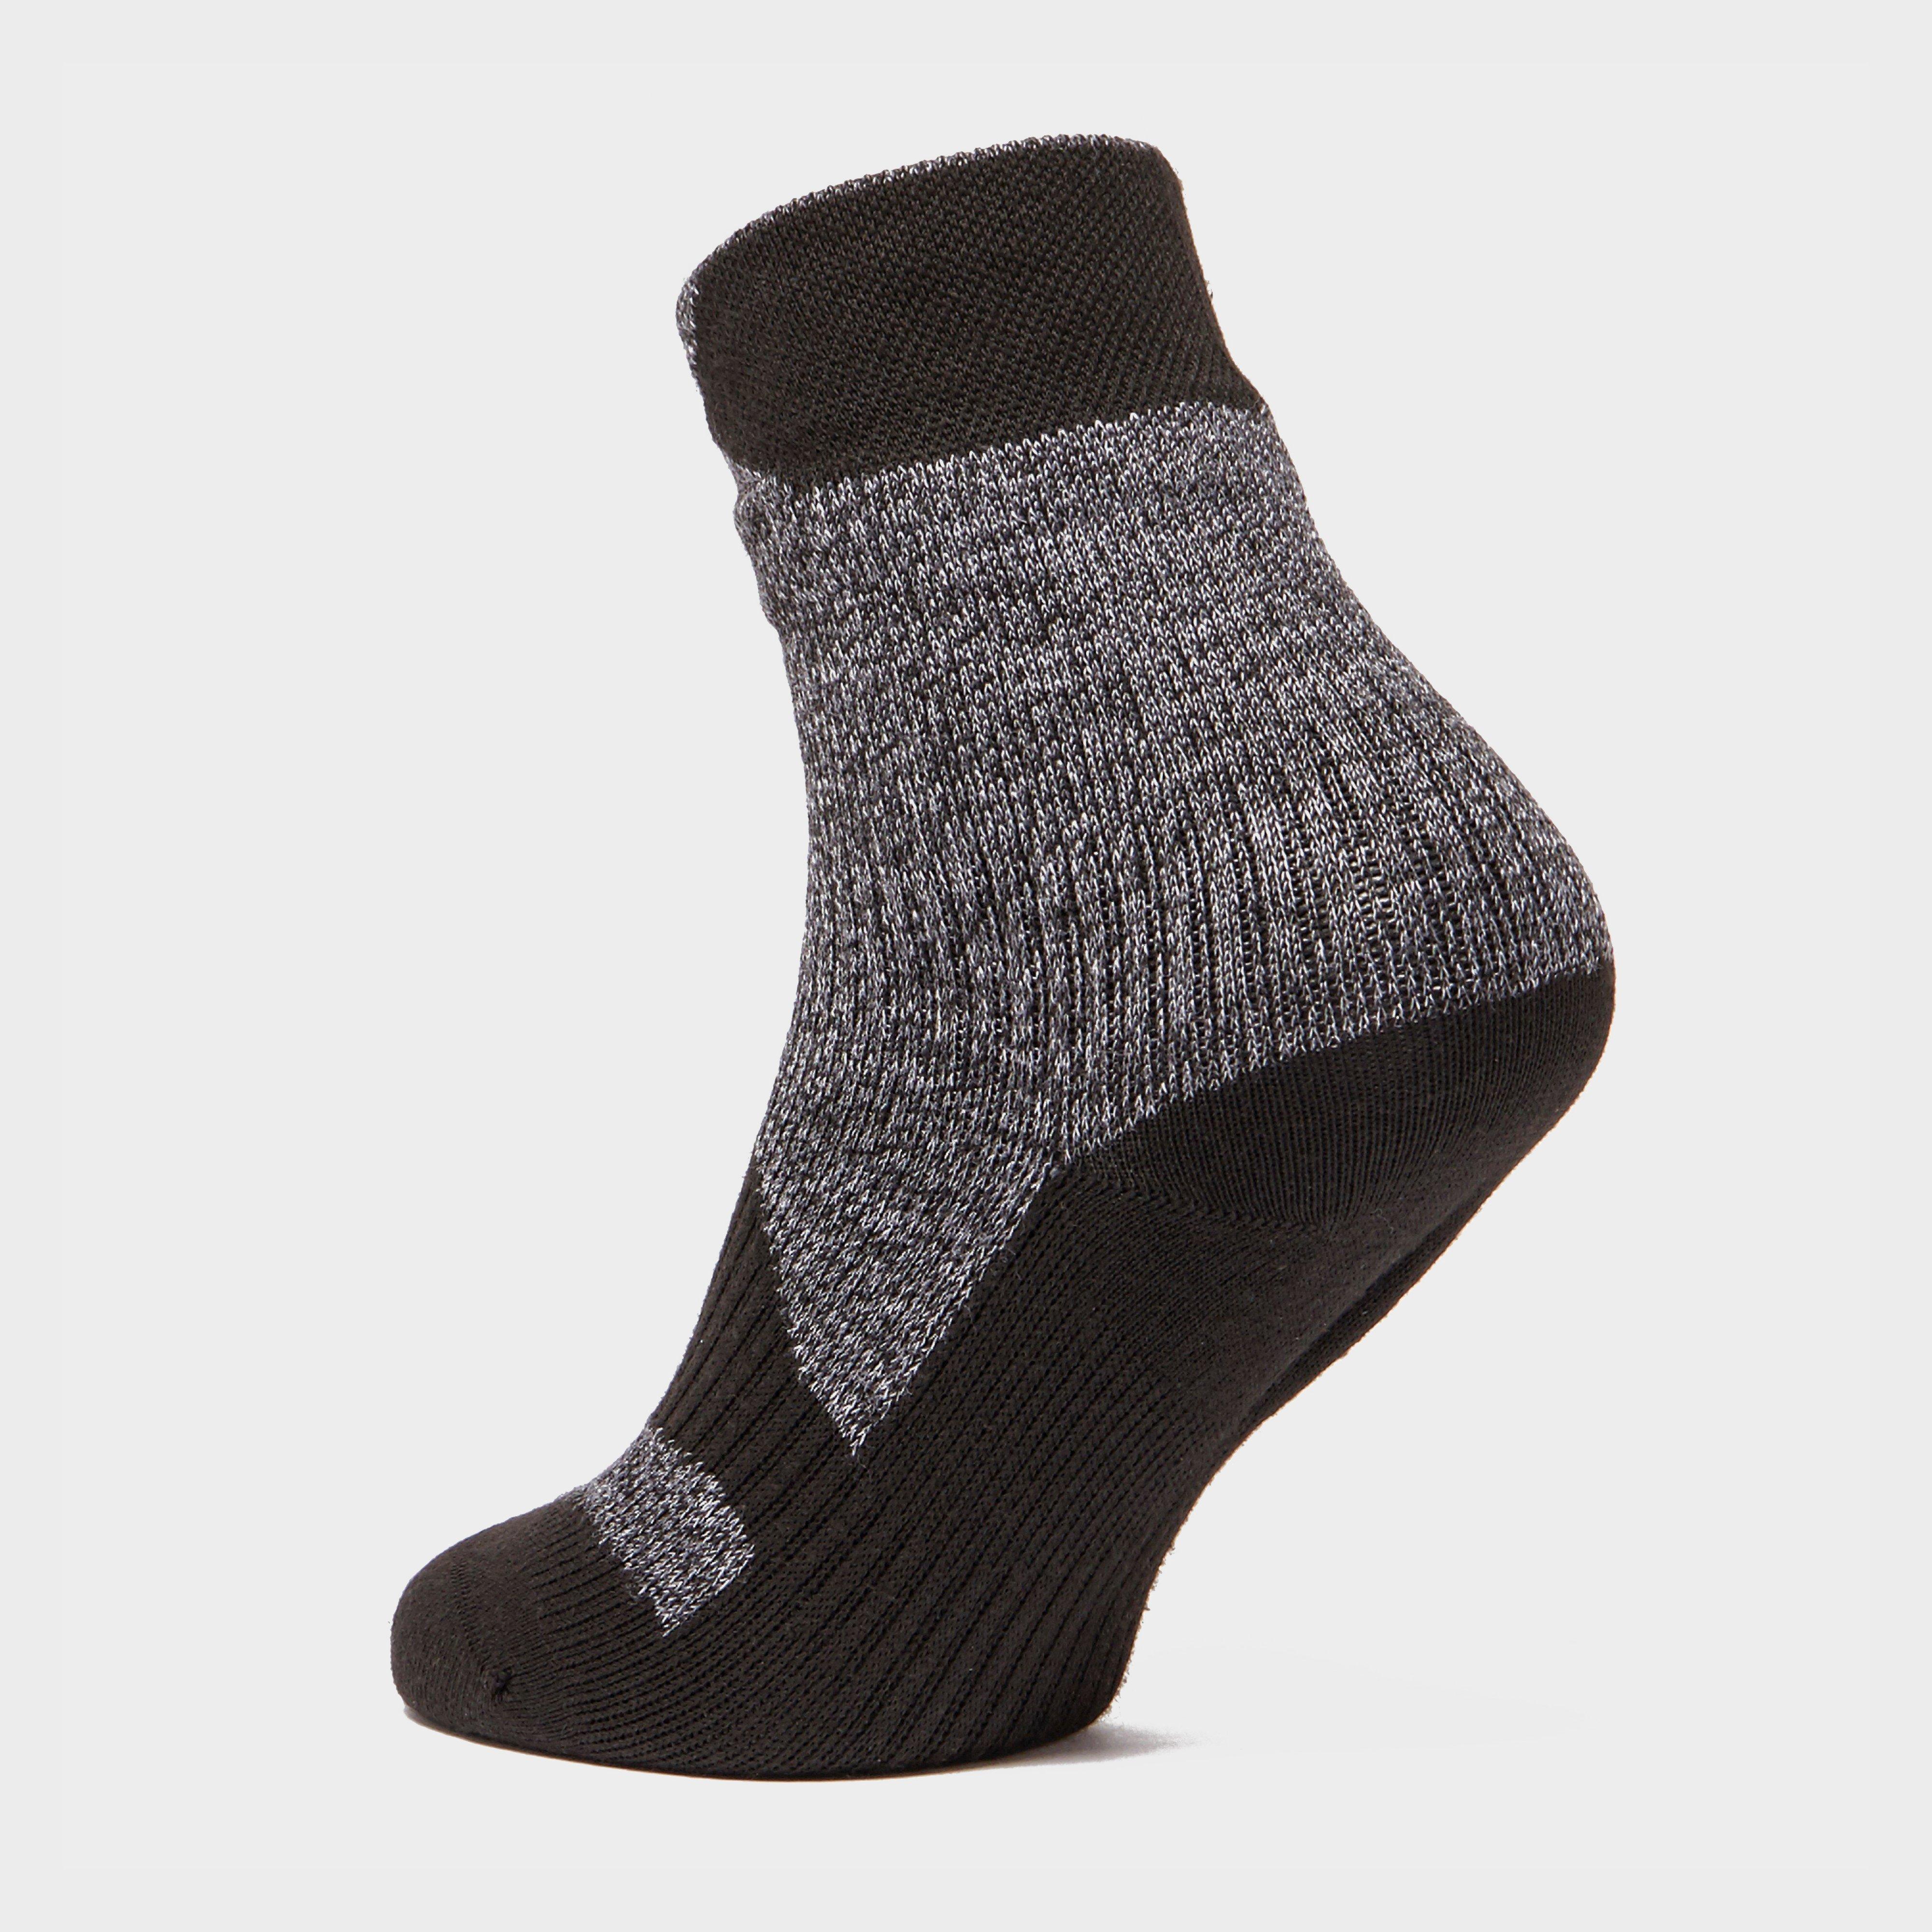 Sealskinz Men's Thin Ankle Socks Review